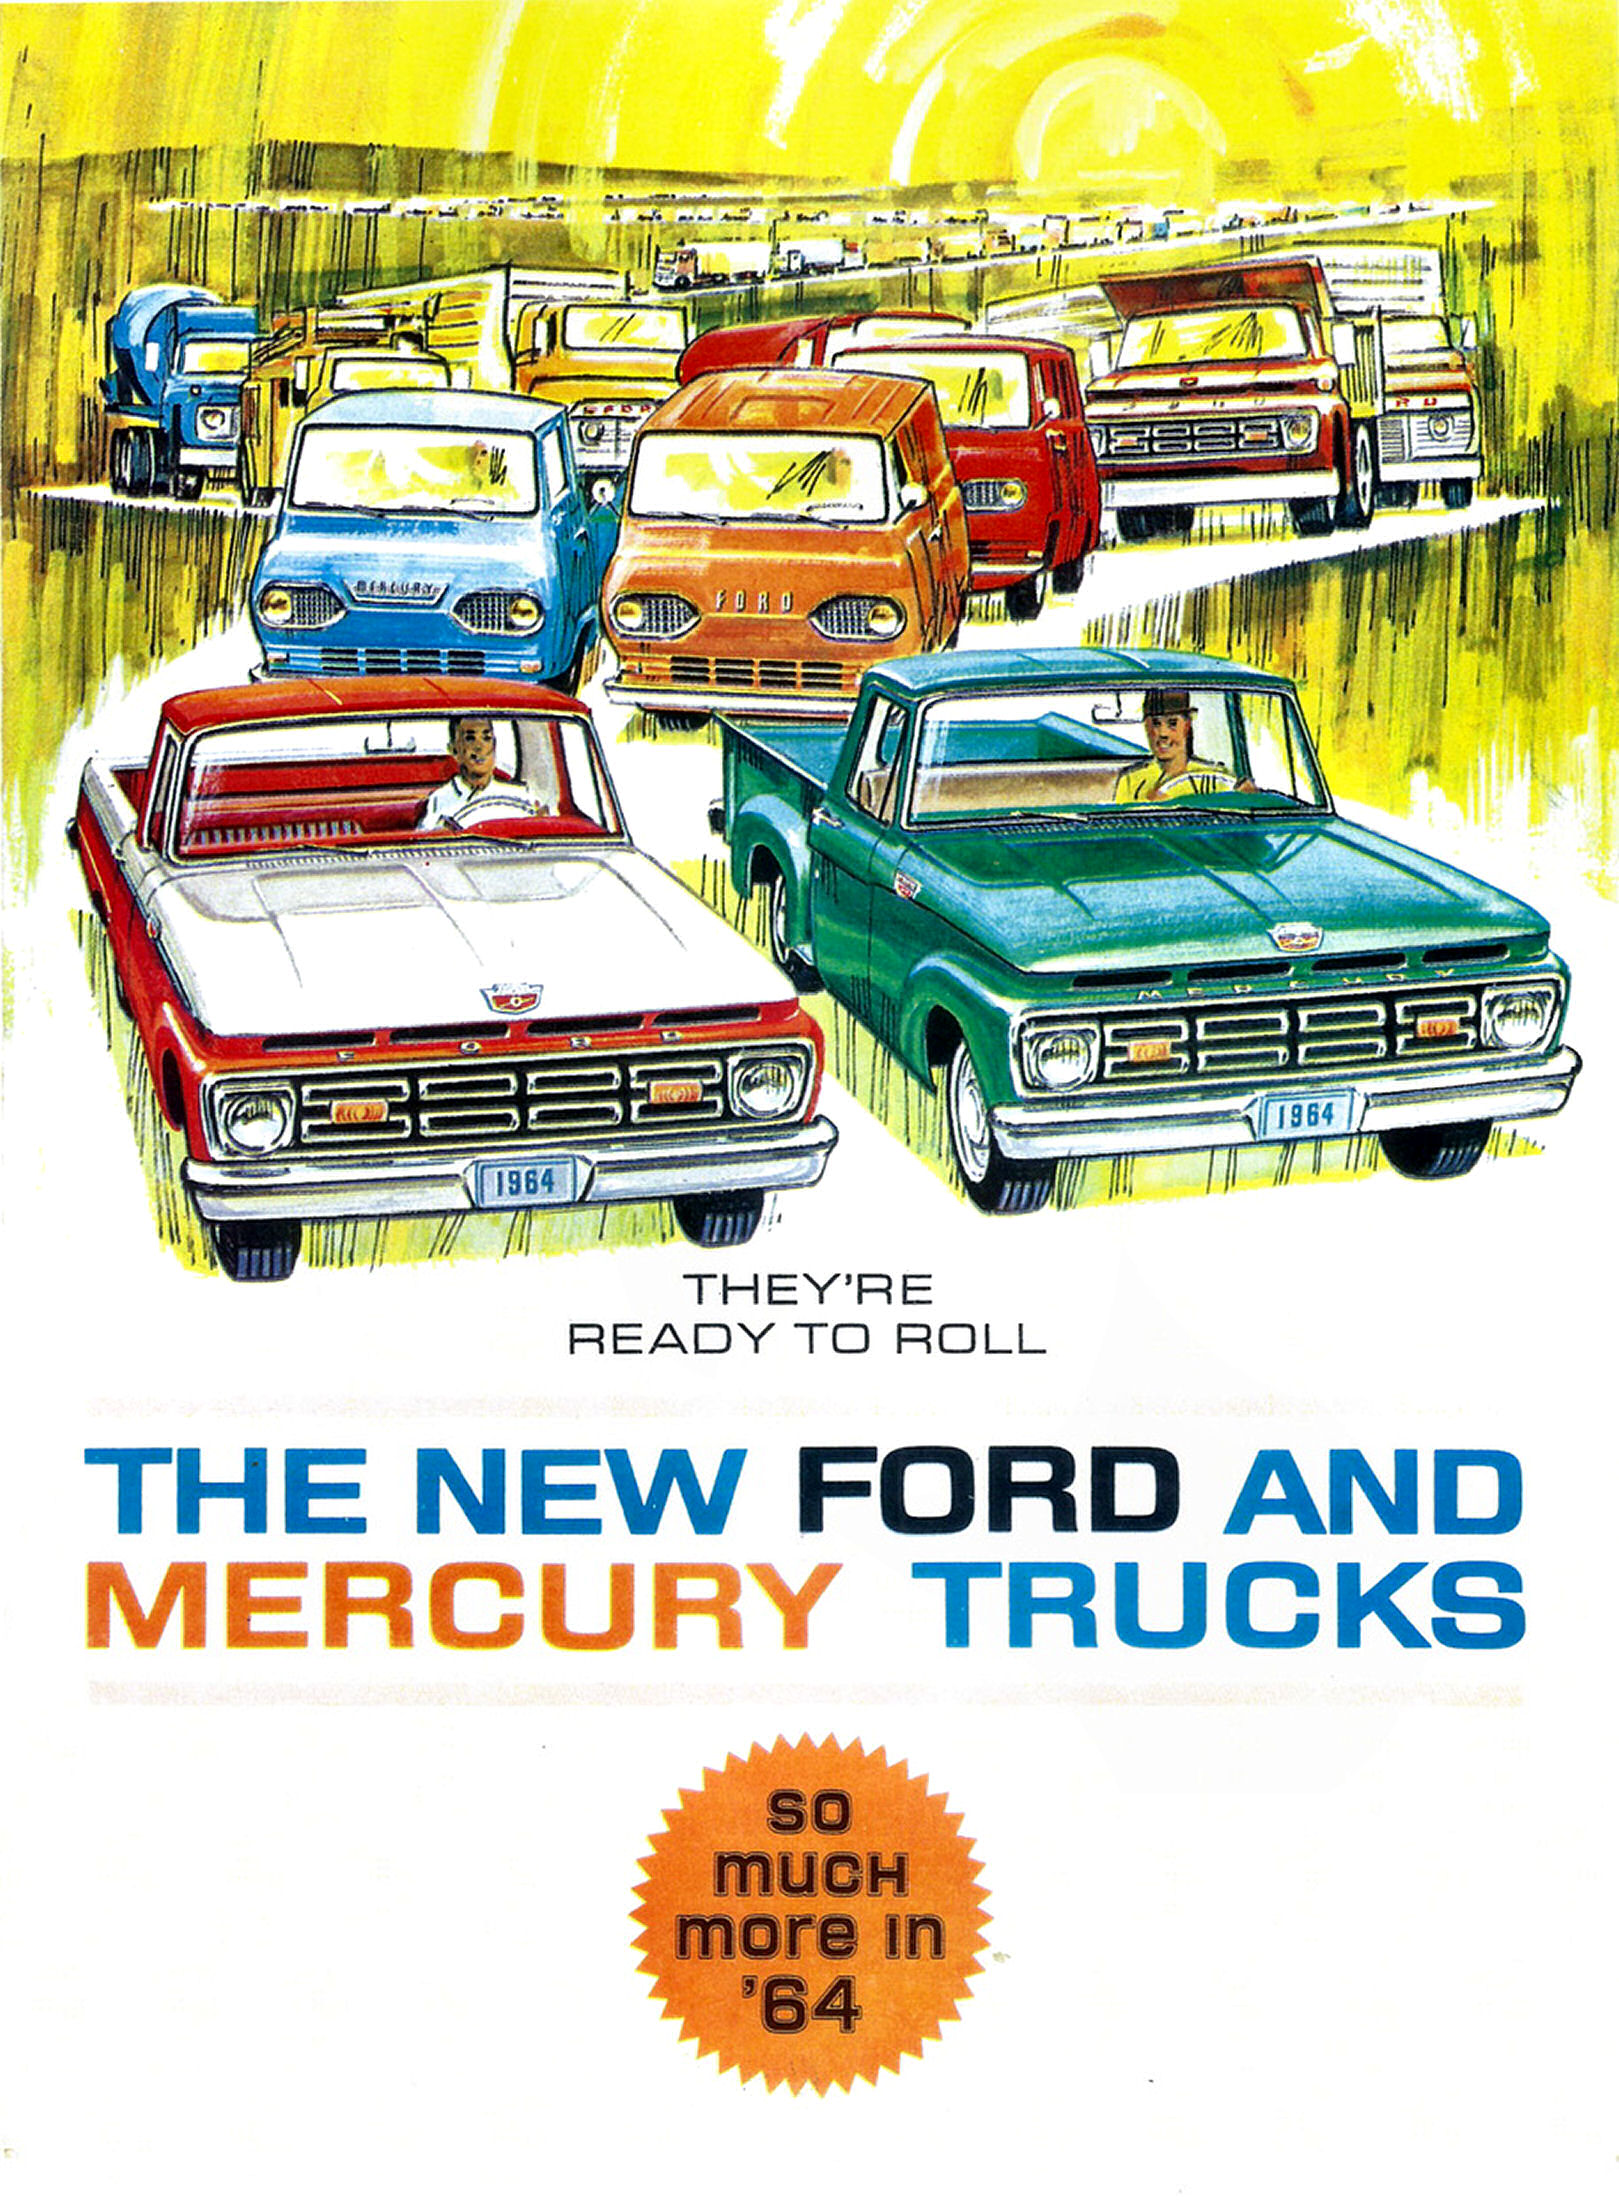 1964 Ford and Mercury Trucks Mailer (Cdn)-01